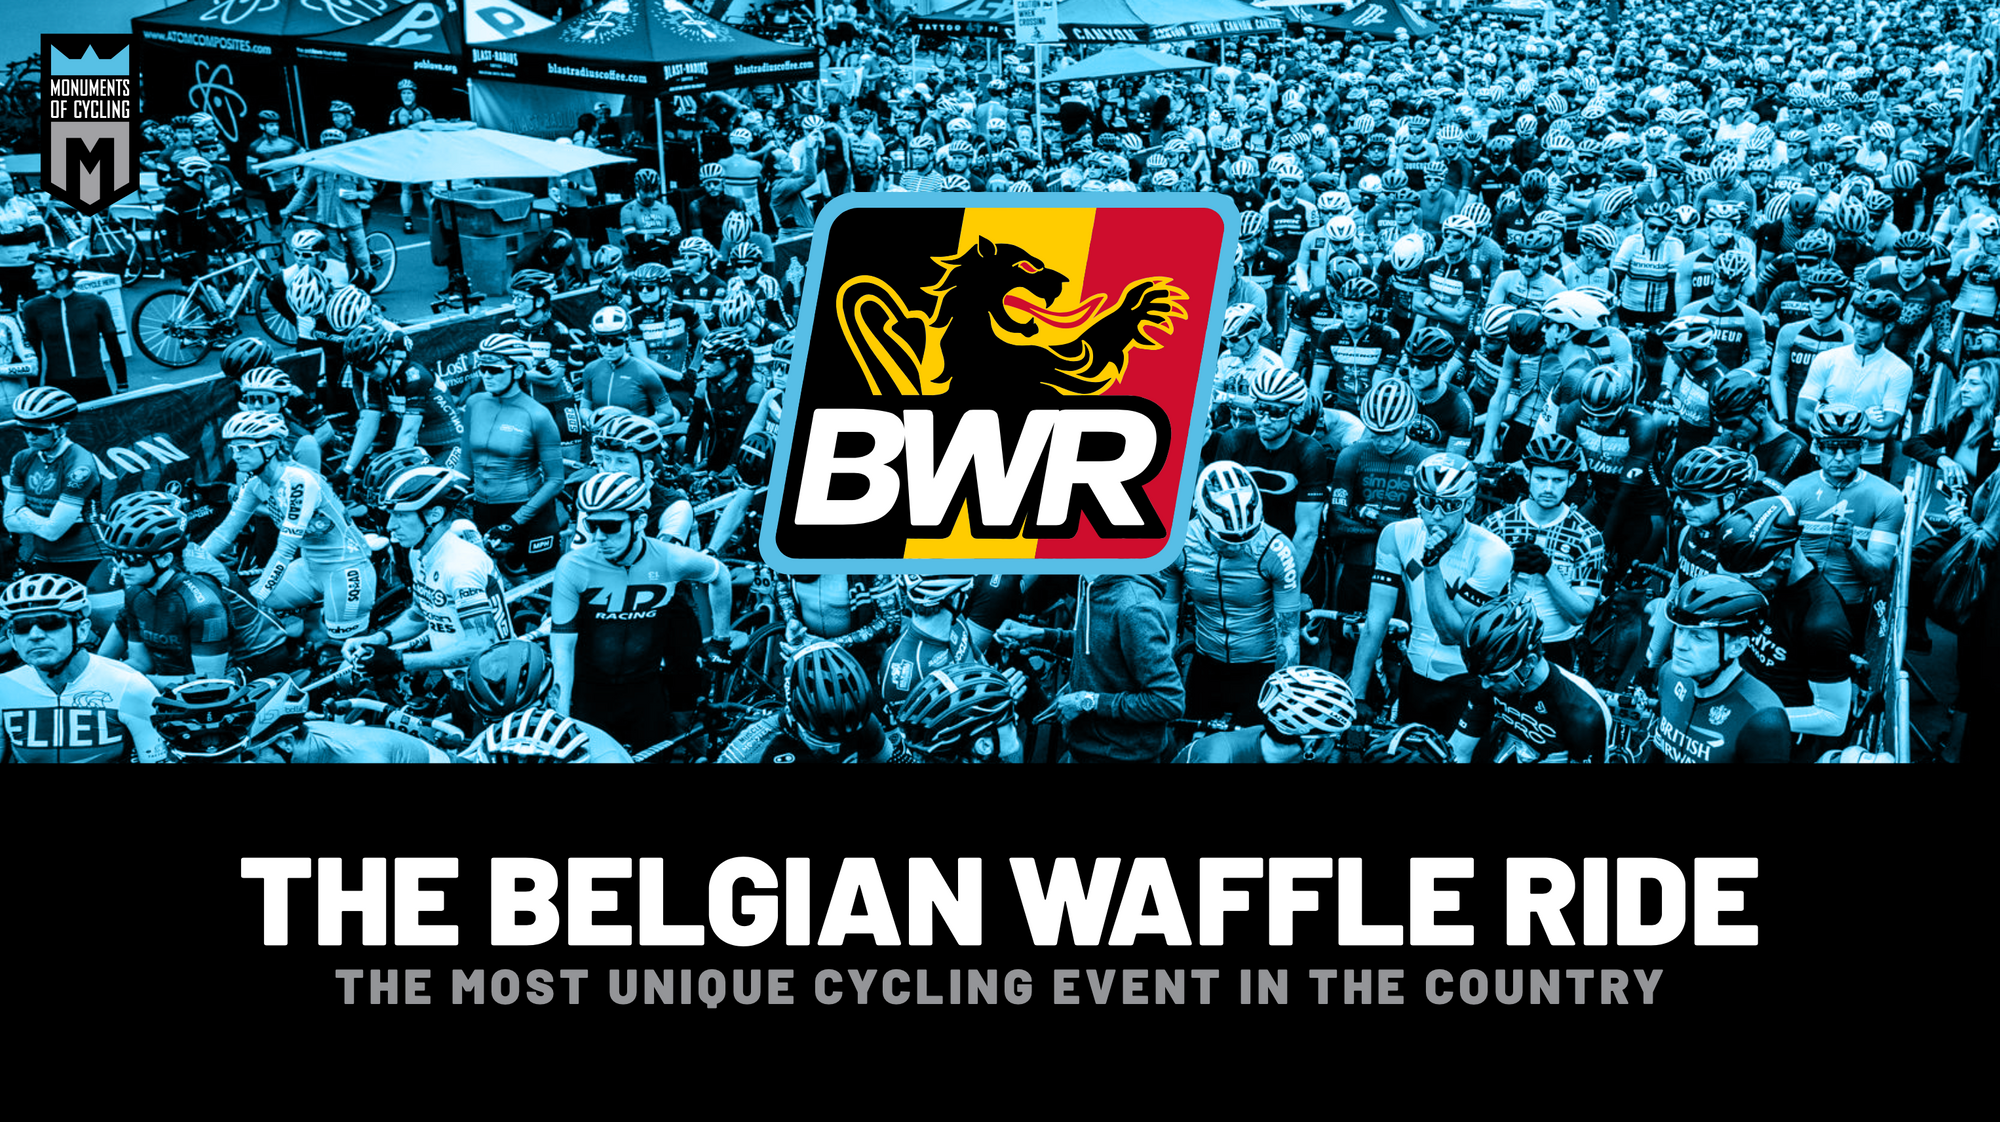 The Belgian Waffle Ride